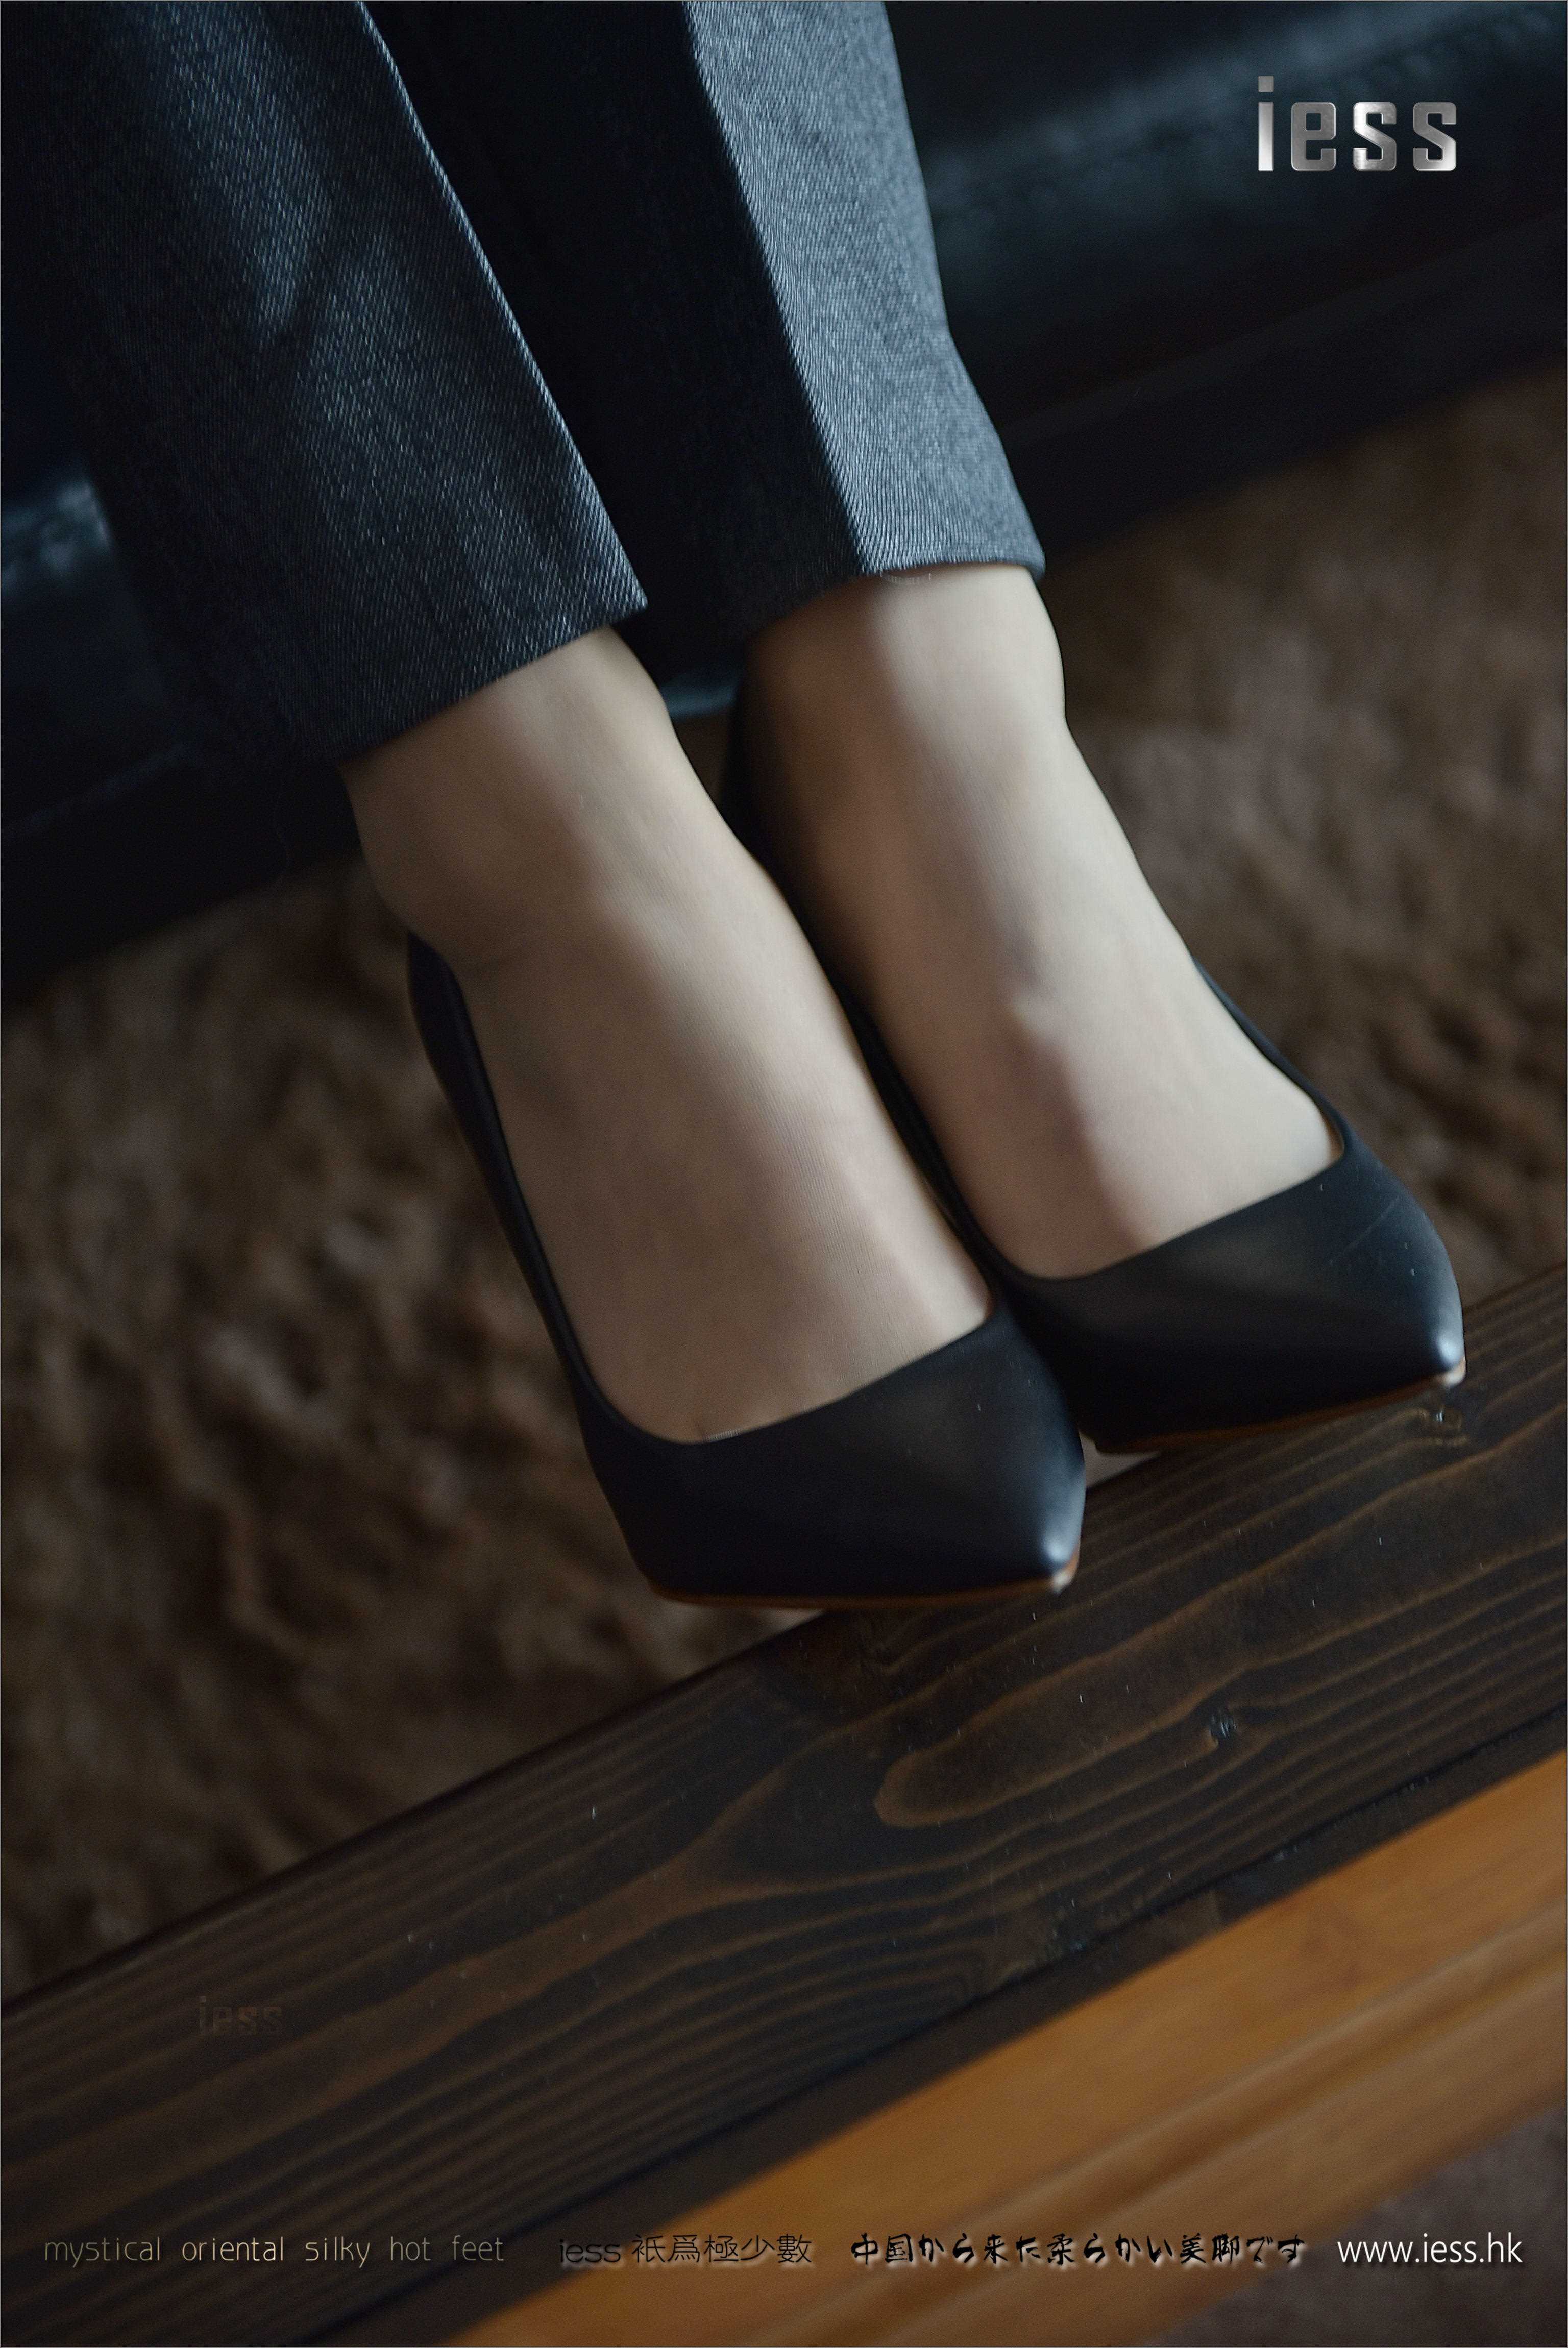 China Beauty Legs and feet 190